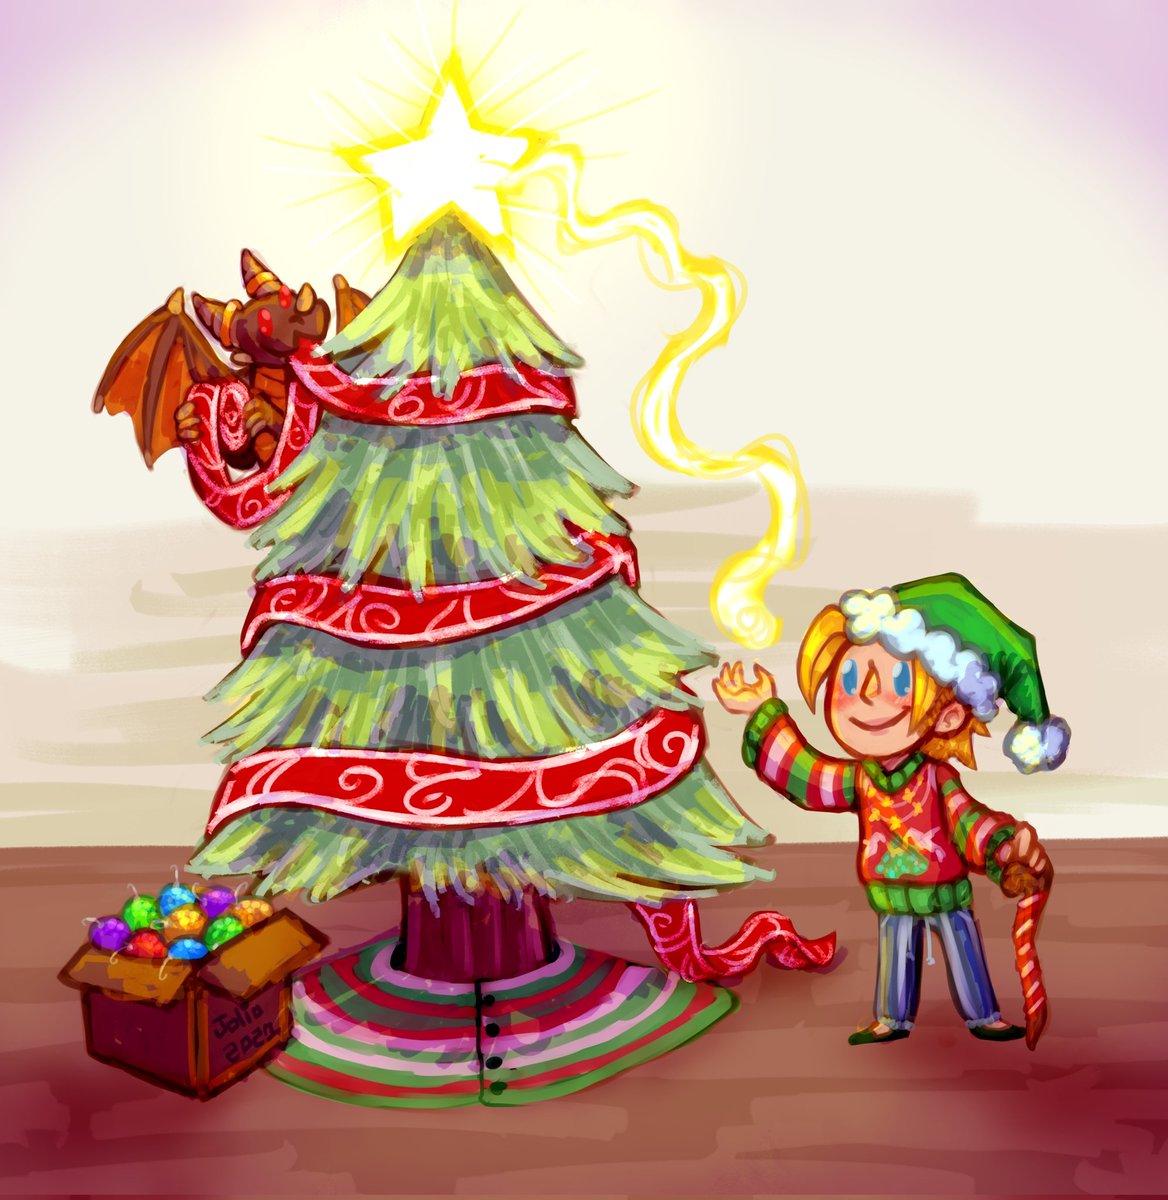 Happy Winter Veil! Heres a secret santa gift featuring the boys! :D